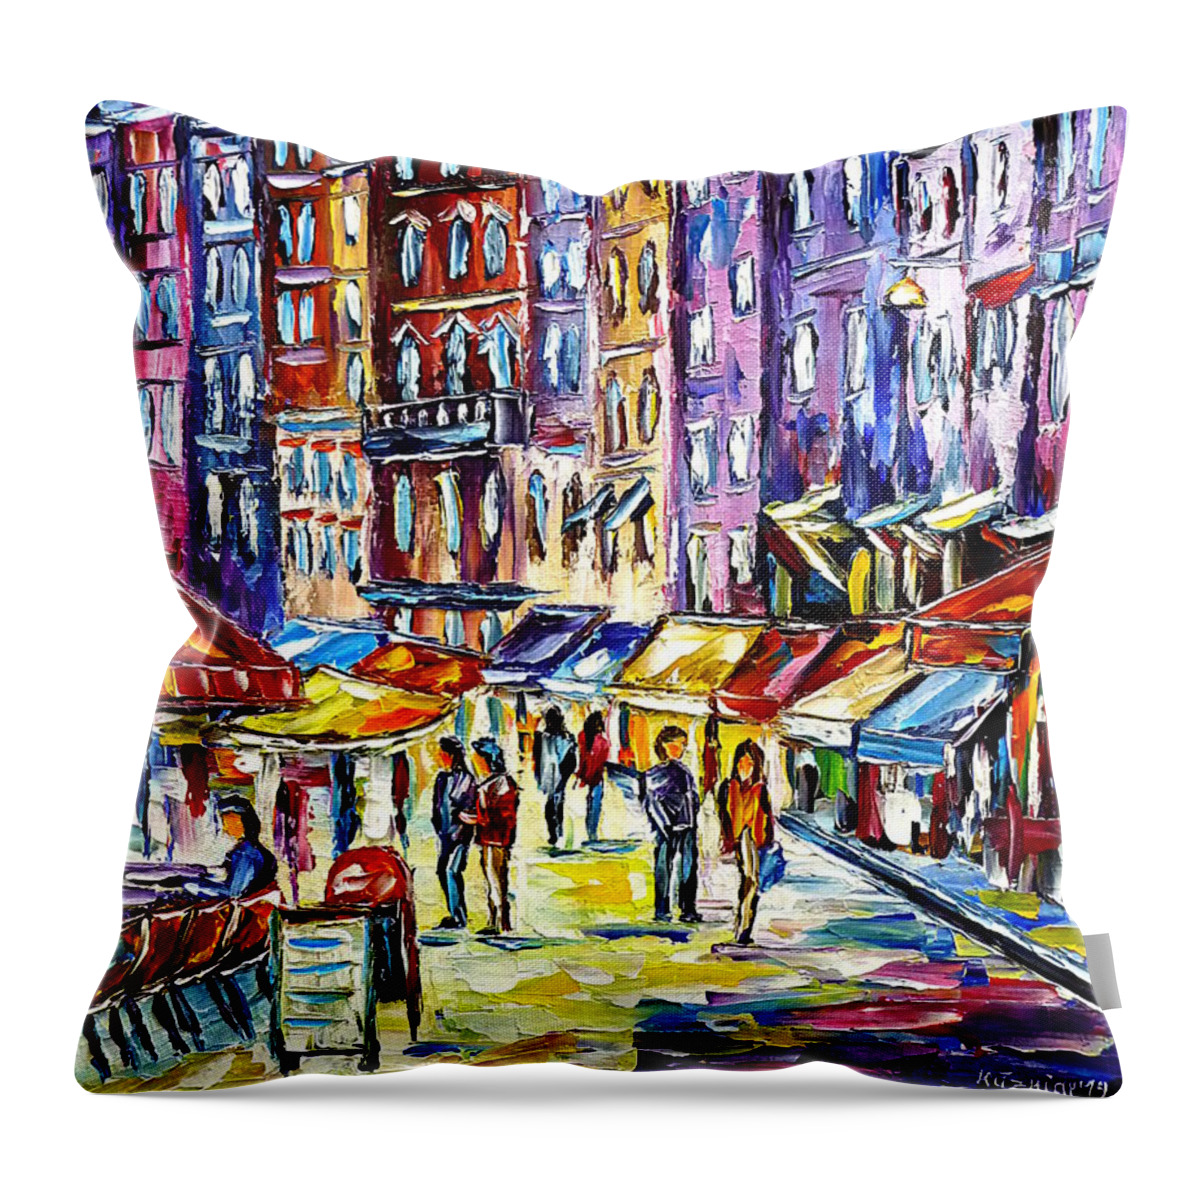 I Love Honfleur Throw Pillow featuring the painting Honfleur Walk by Mirek Kuzniar